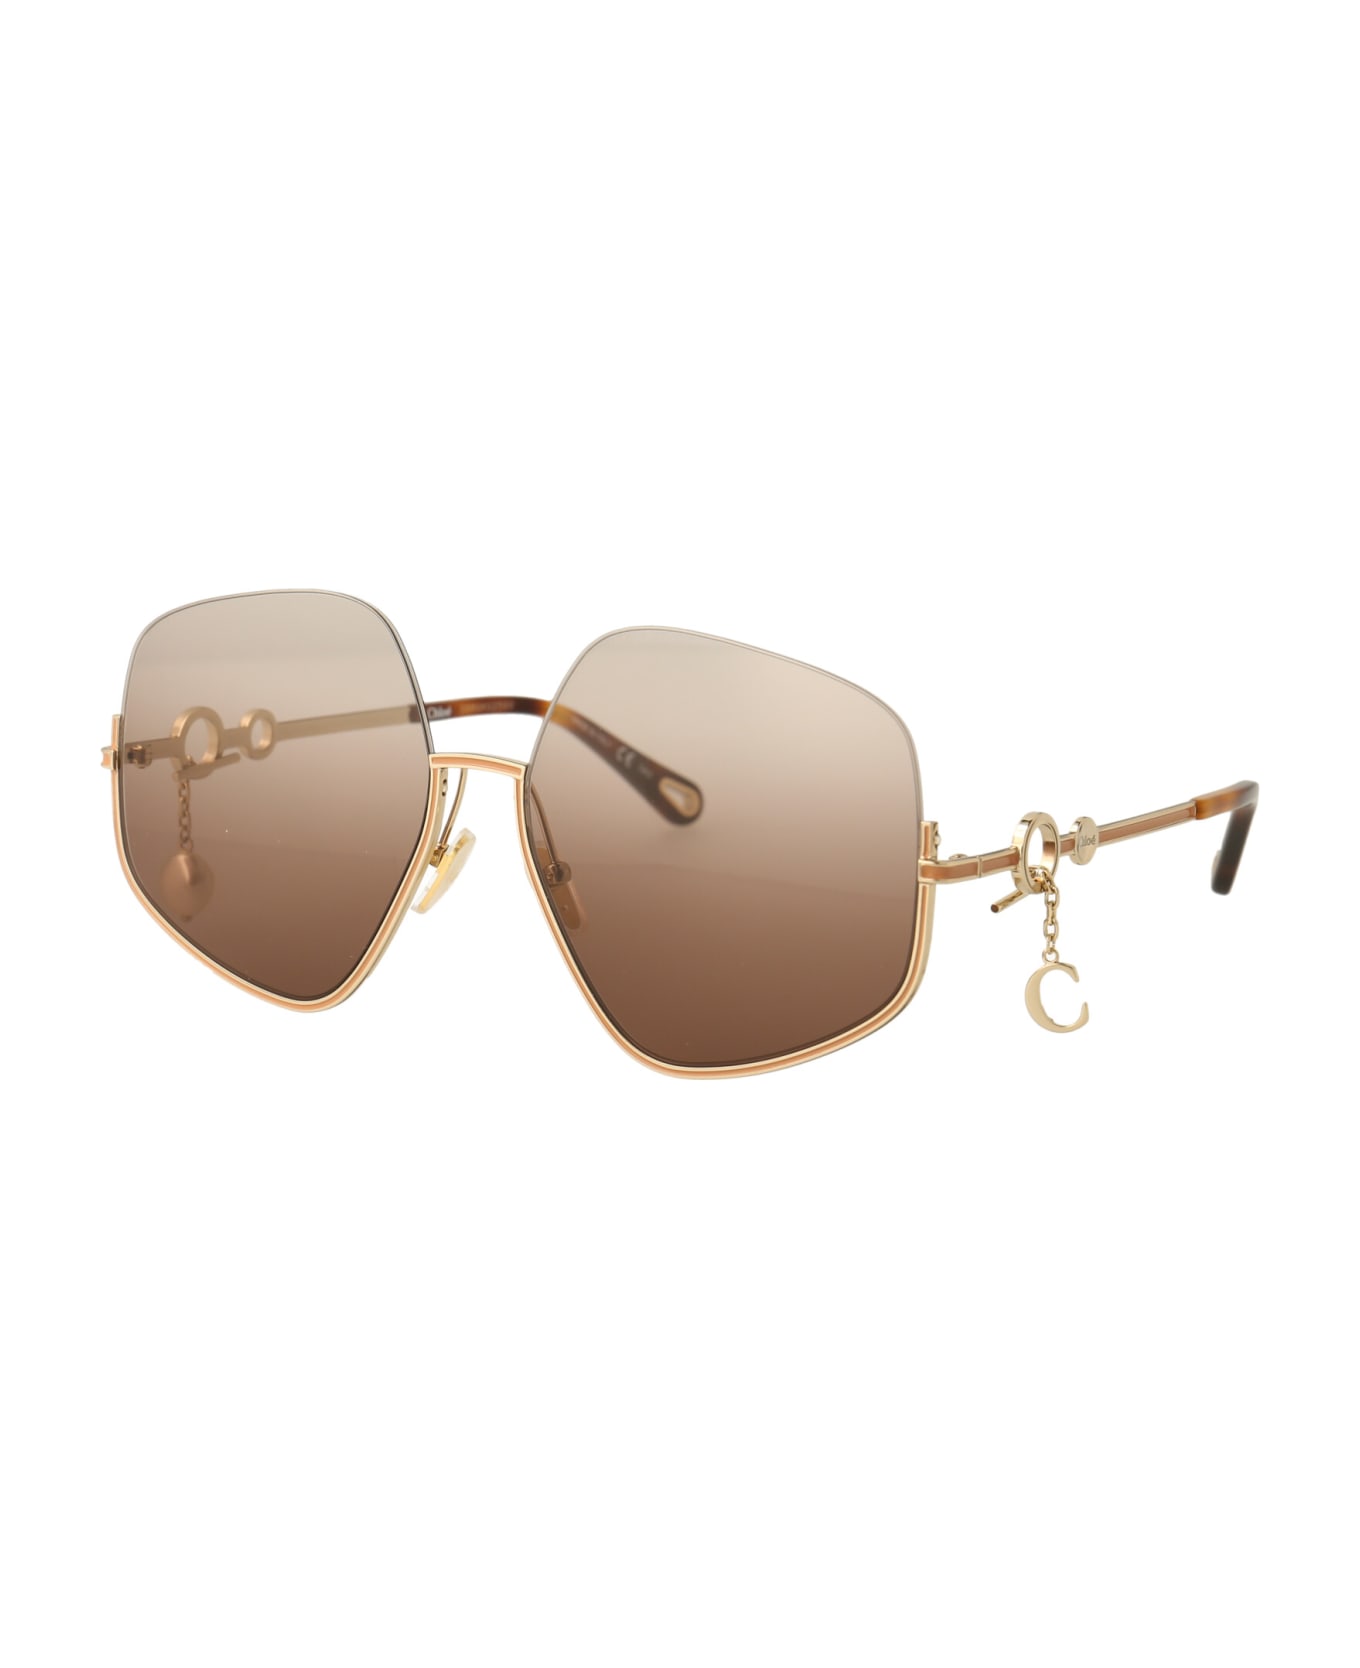 Chloé Eyewear Ch0068s Sunglasses - 003 GOLD GOLD BROWN